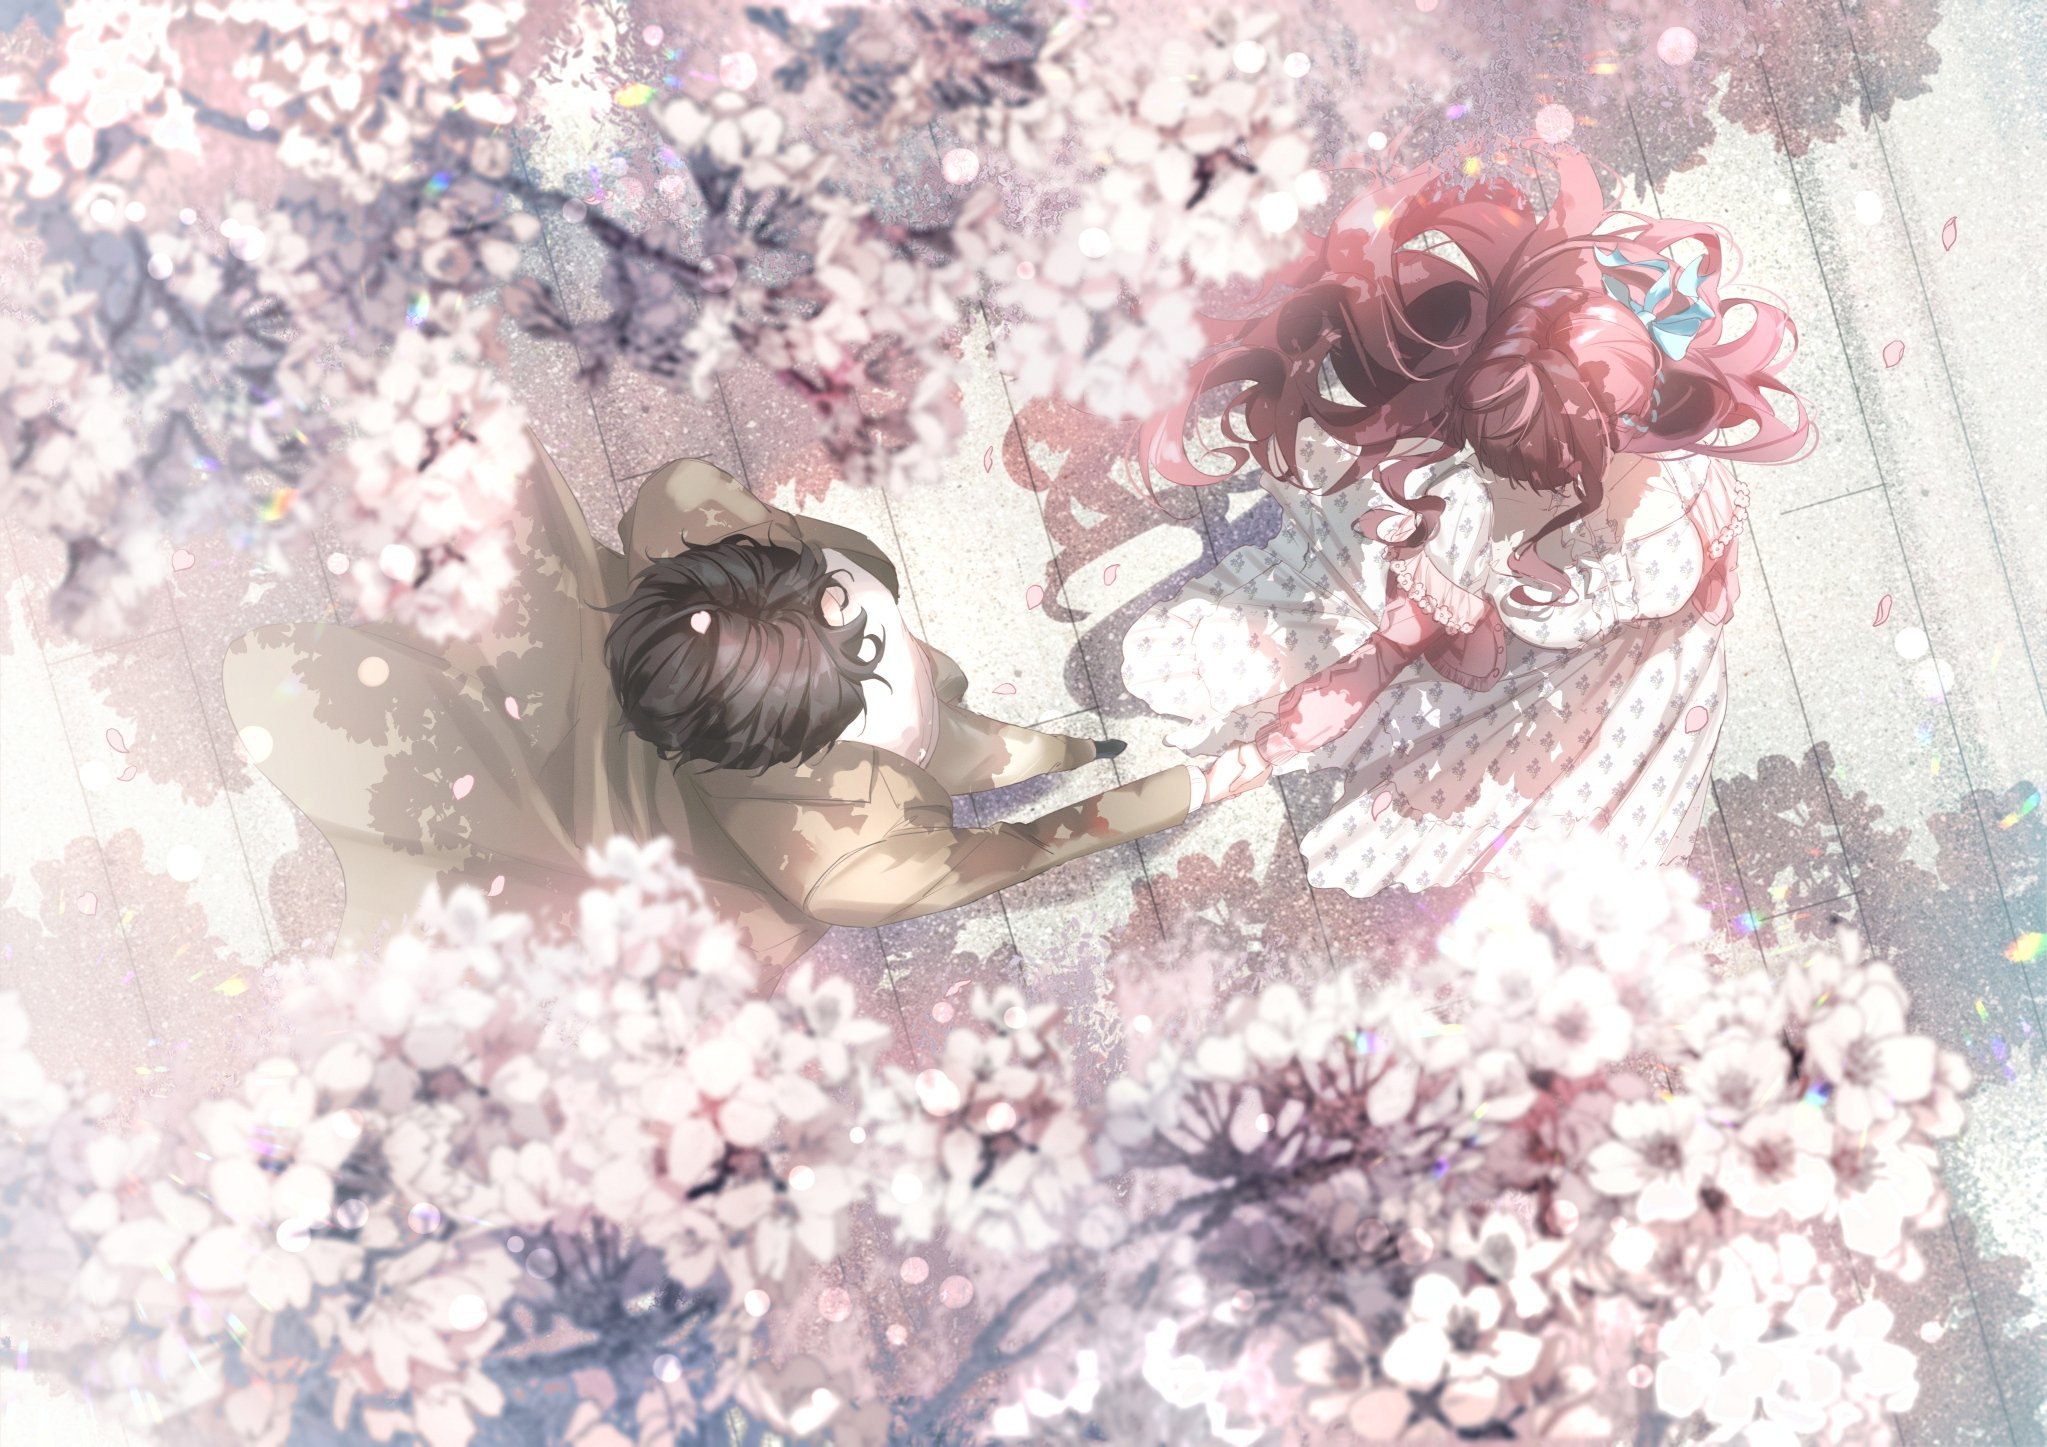 Wallpaper Anime Couple, Romance, Top View, Dress, Spring, Holding Hands, Sakura Blossom:2047x1447